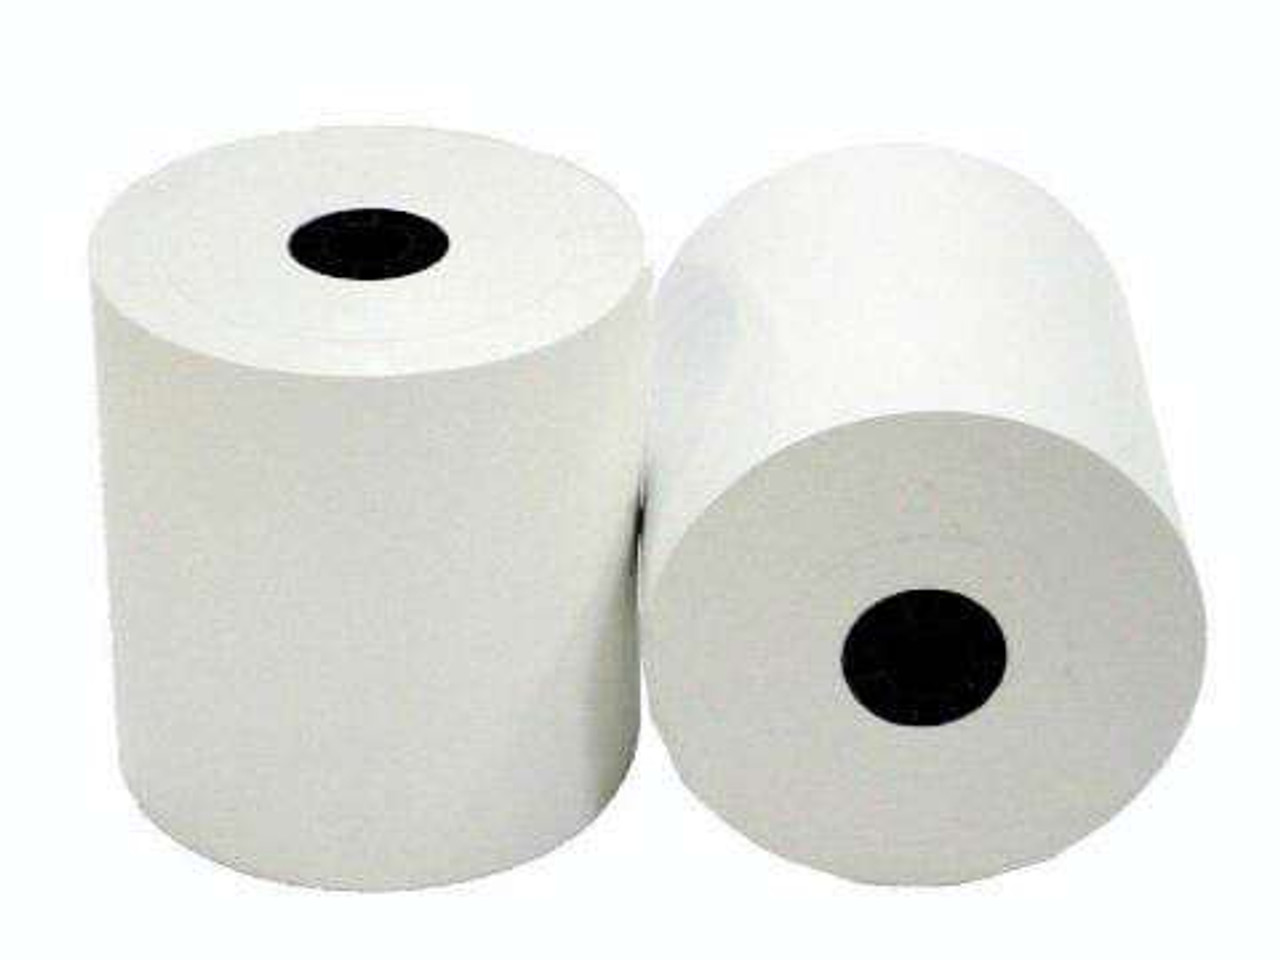 Epson Thermal Receipt Printer Paper Rolls